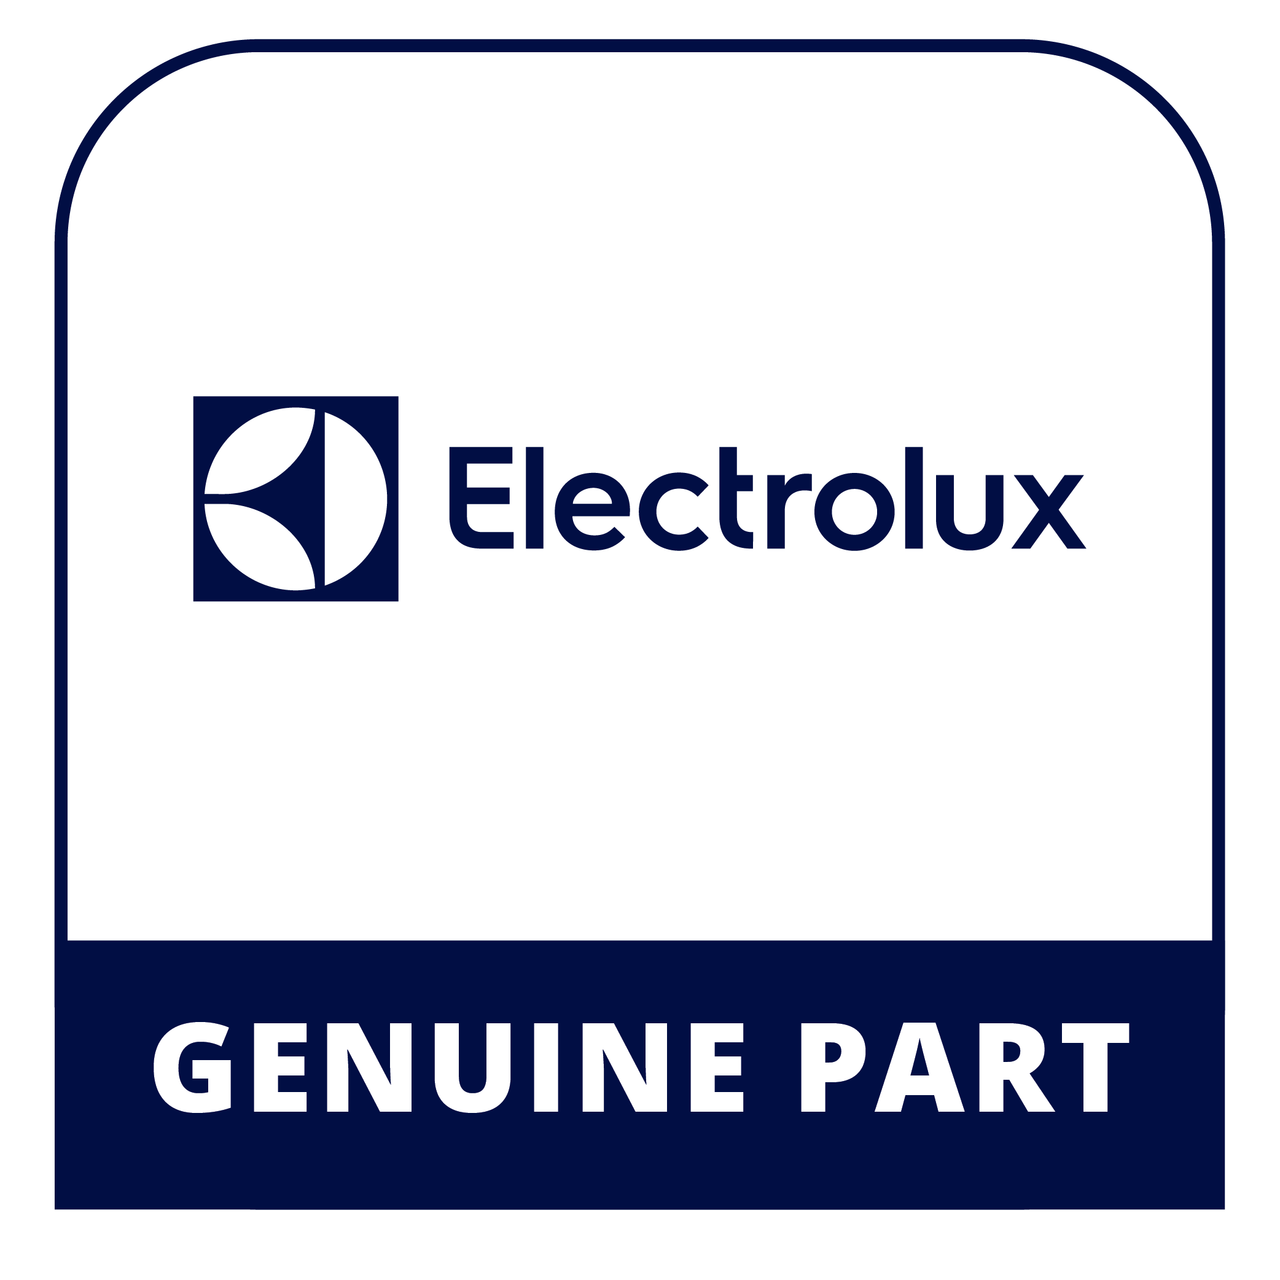 Frigidaire - Electrolux 318254405 Gasket - Genuine Electrolux Part